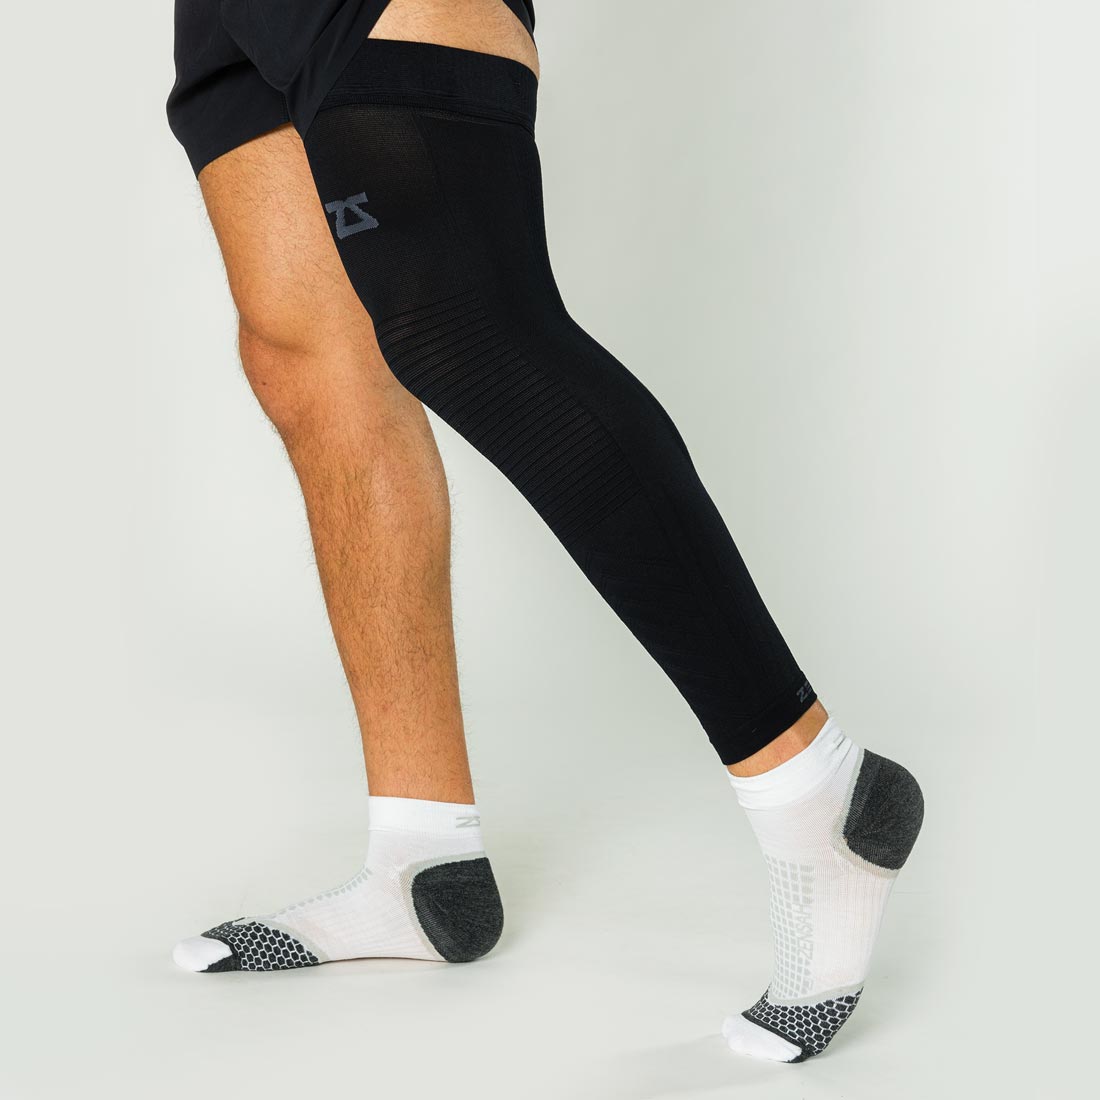 Compression Leg Sleeve Full Length Leg Sleeves Sports Cycling Leg Sleeves  for Men Women, Running, Basketball